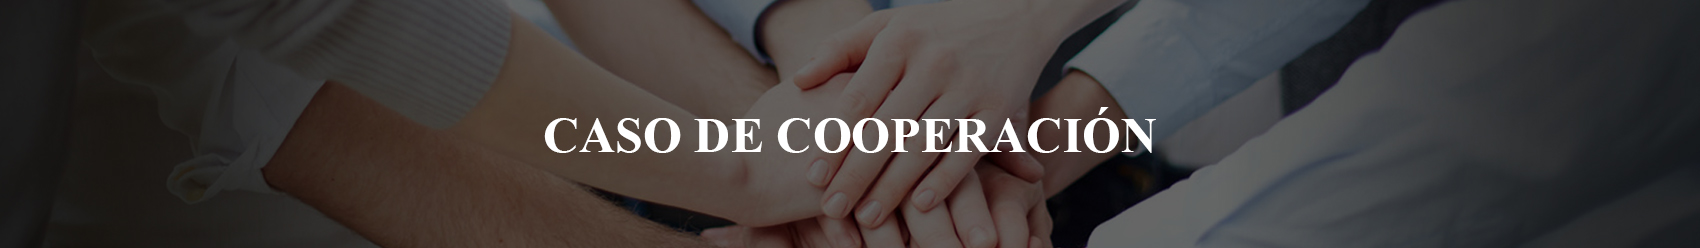 Cooperation Case banner